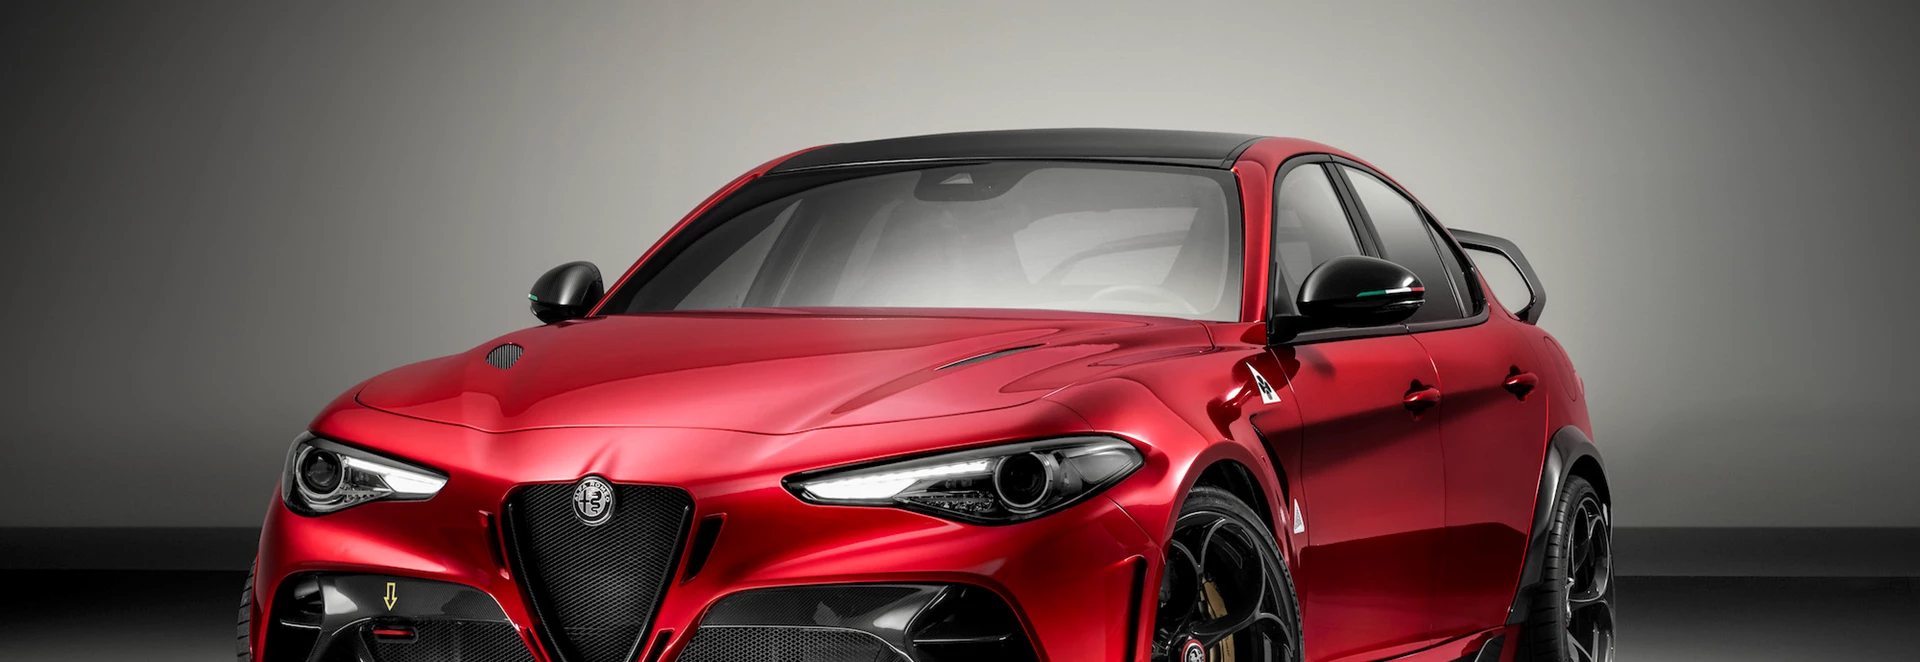 2020 Alfa Romeo Giulia GTA revealed as 533bhp performance powerhouse